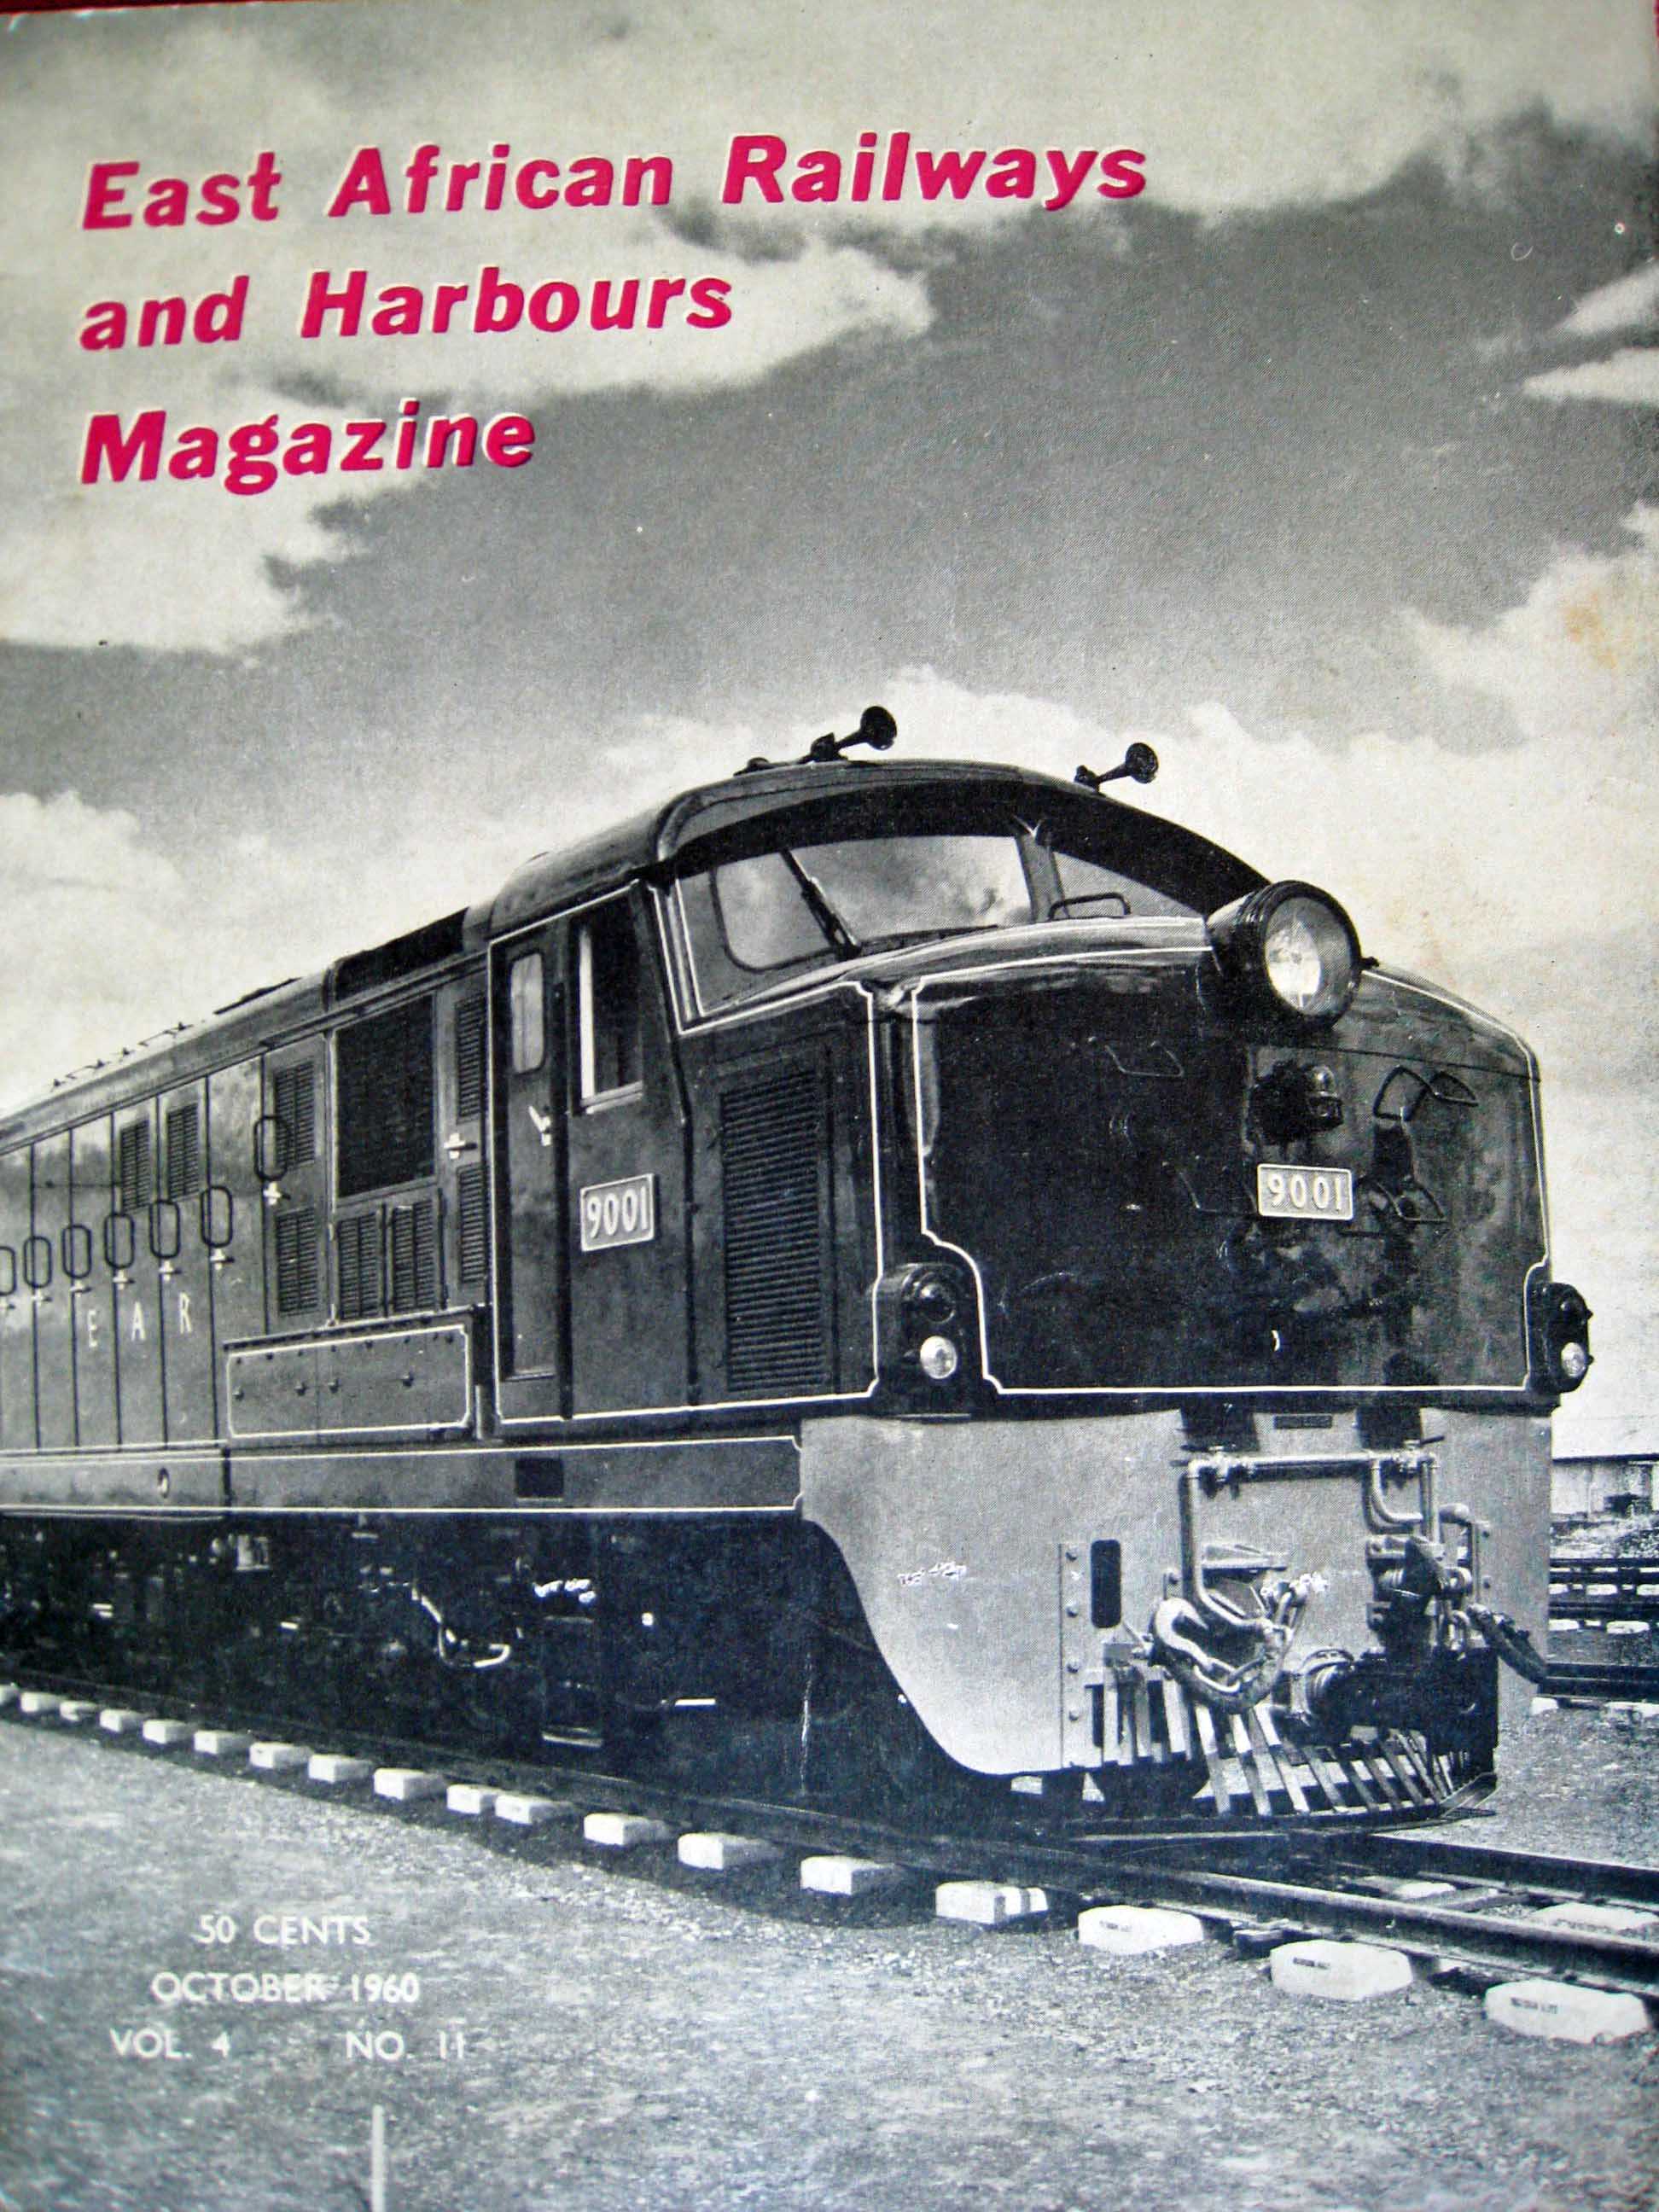 To School Behind a Garratt - School Trains and the Locomotive That Hauled Them1944 x 2592